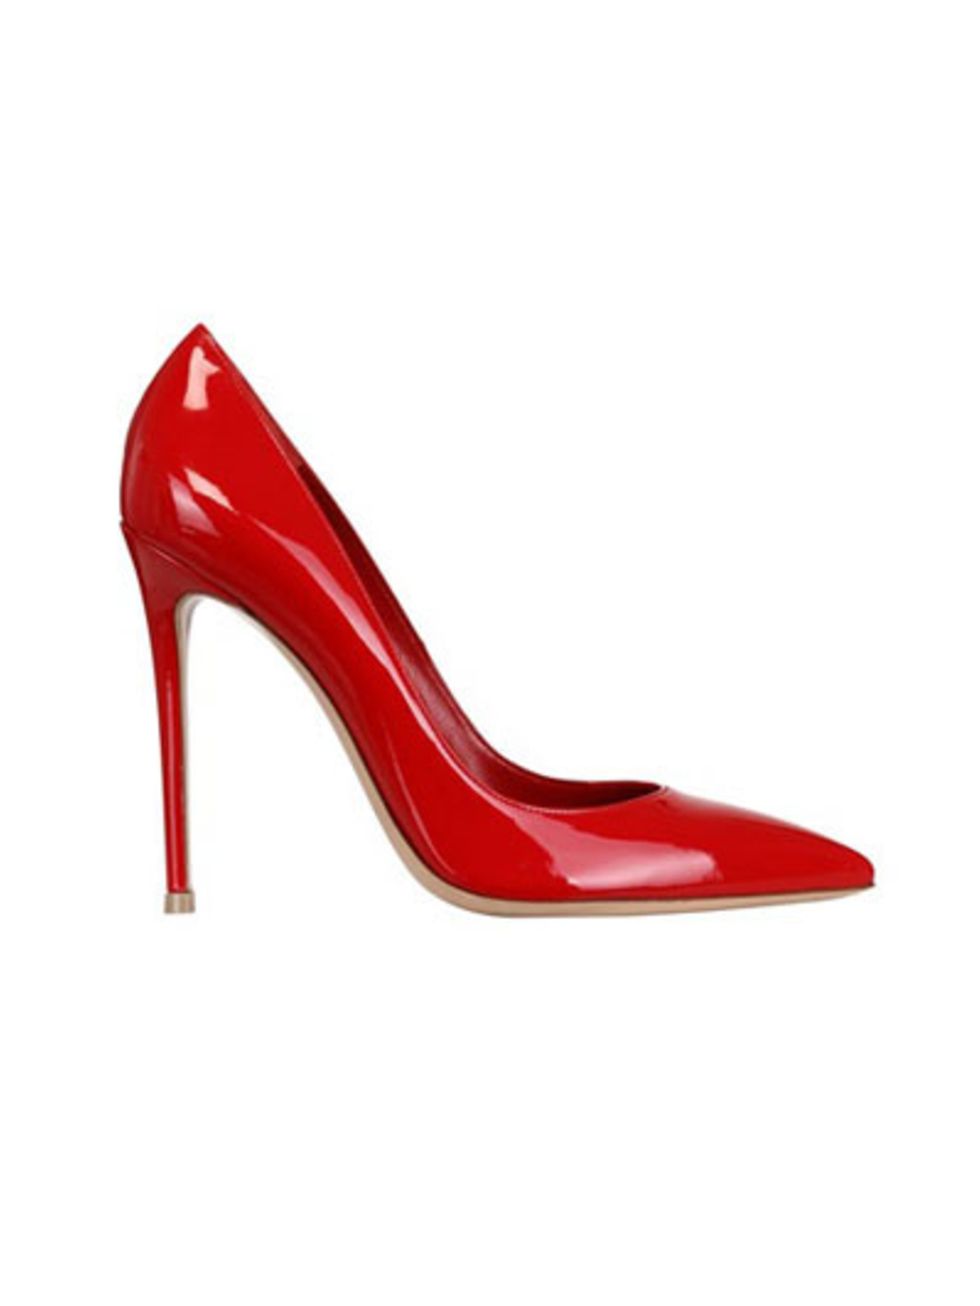 High heels, Red, Basic pump, Carmine, Maroon, Sandal, Court shoe, Beige, Bridal shoe, Foot, 